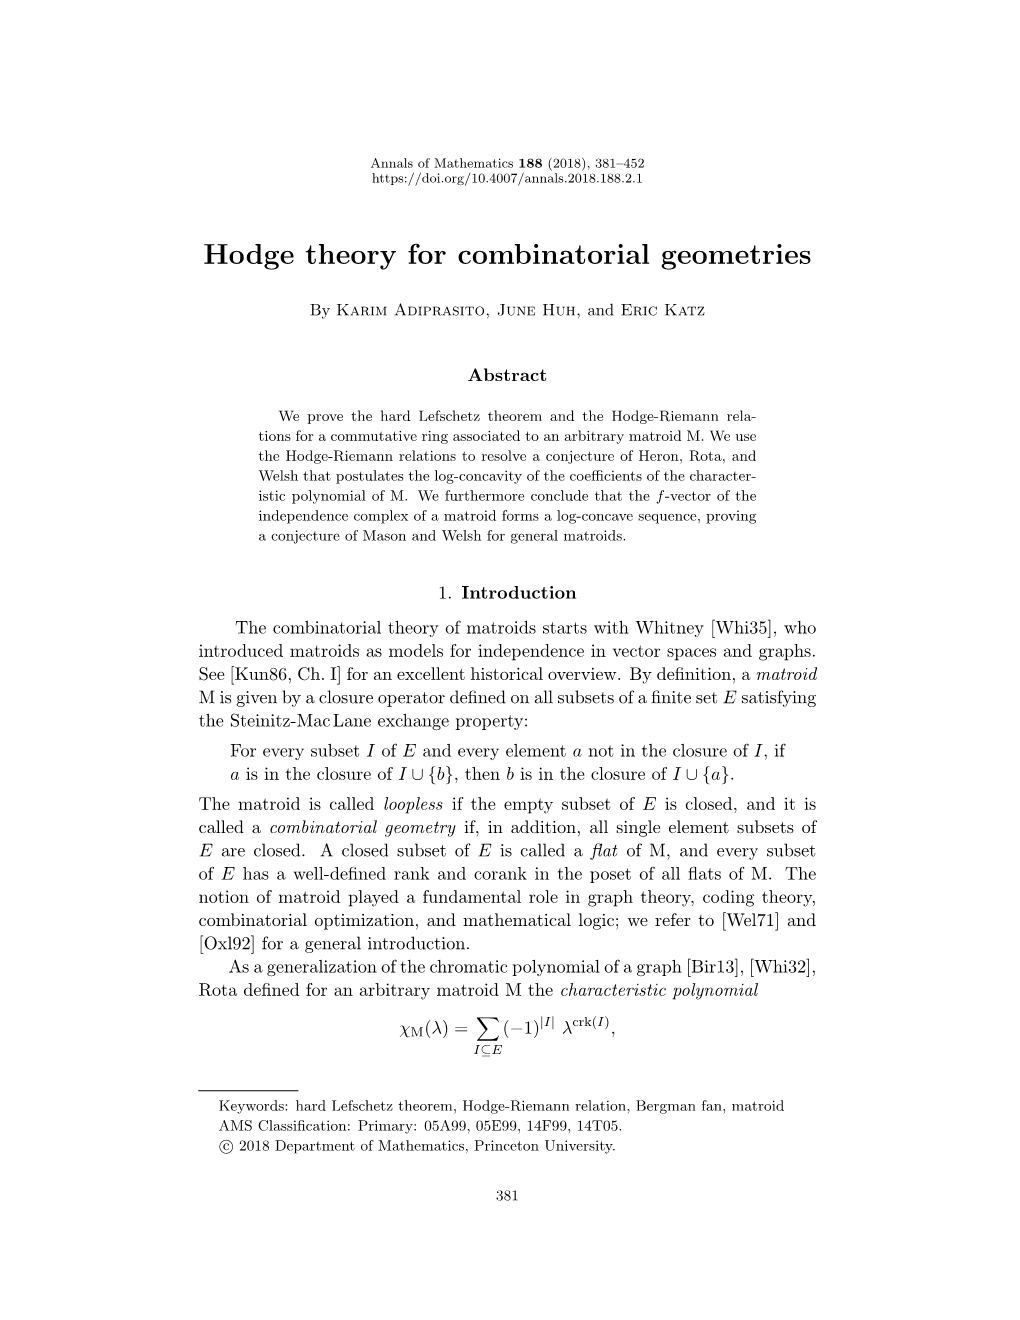 Hodge Theory for Combinatorial Geometries